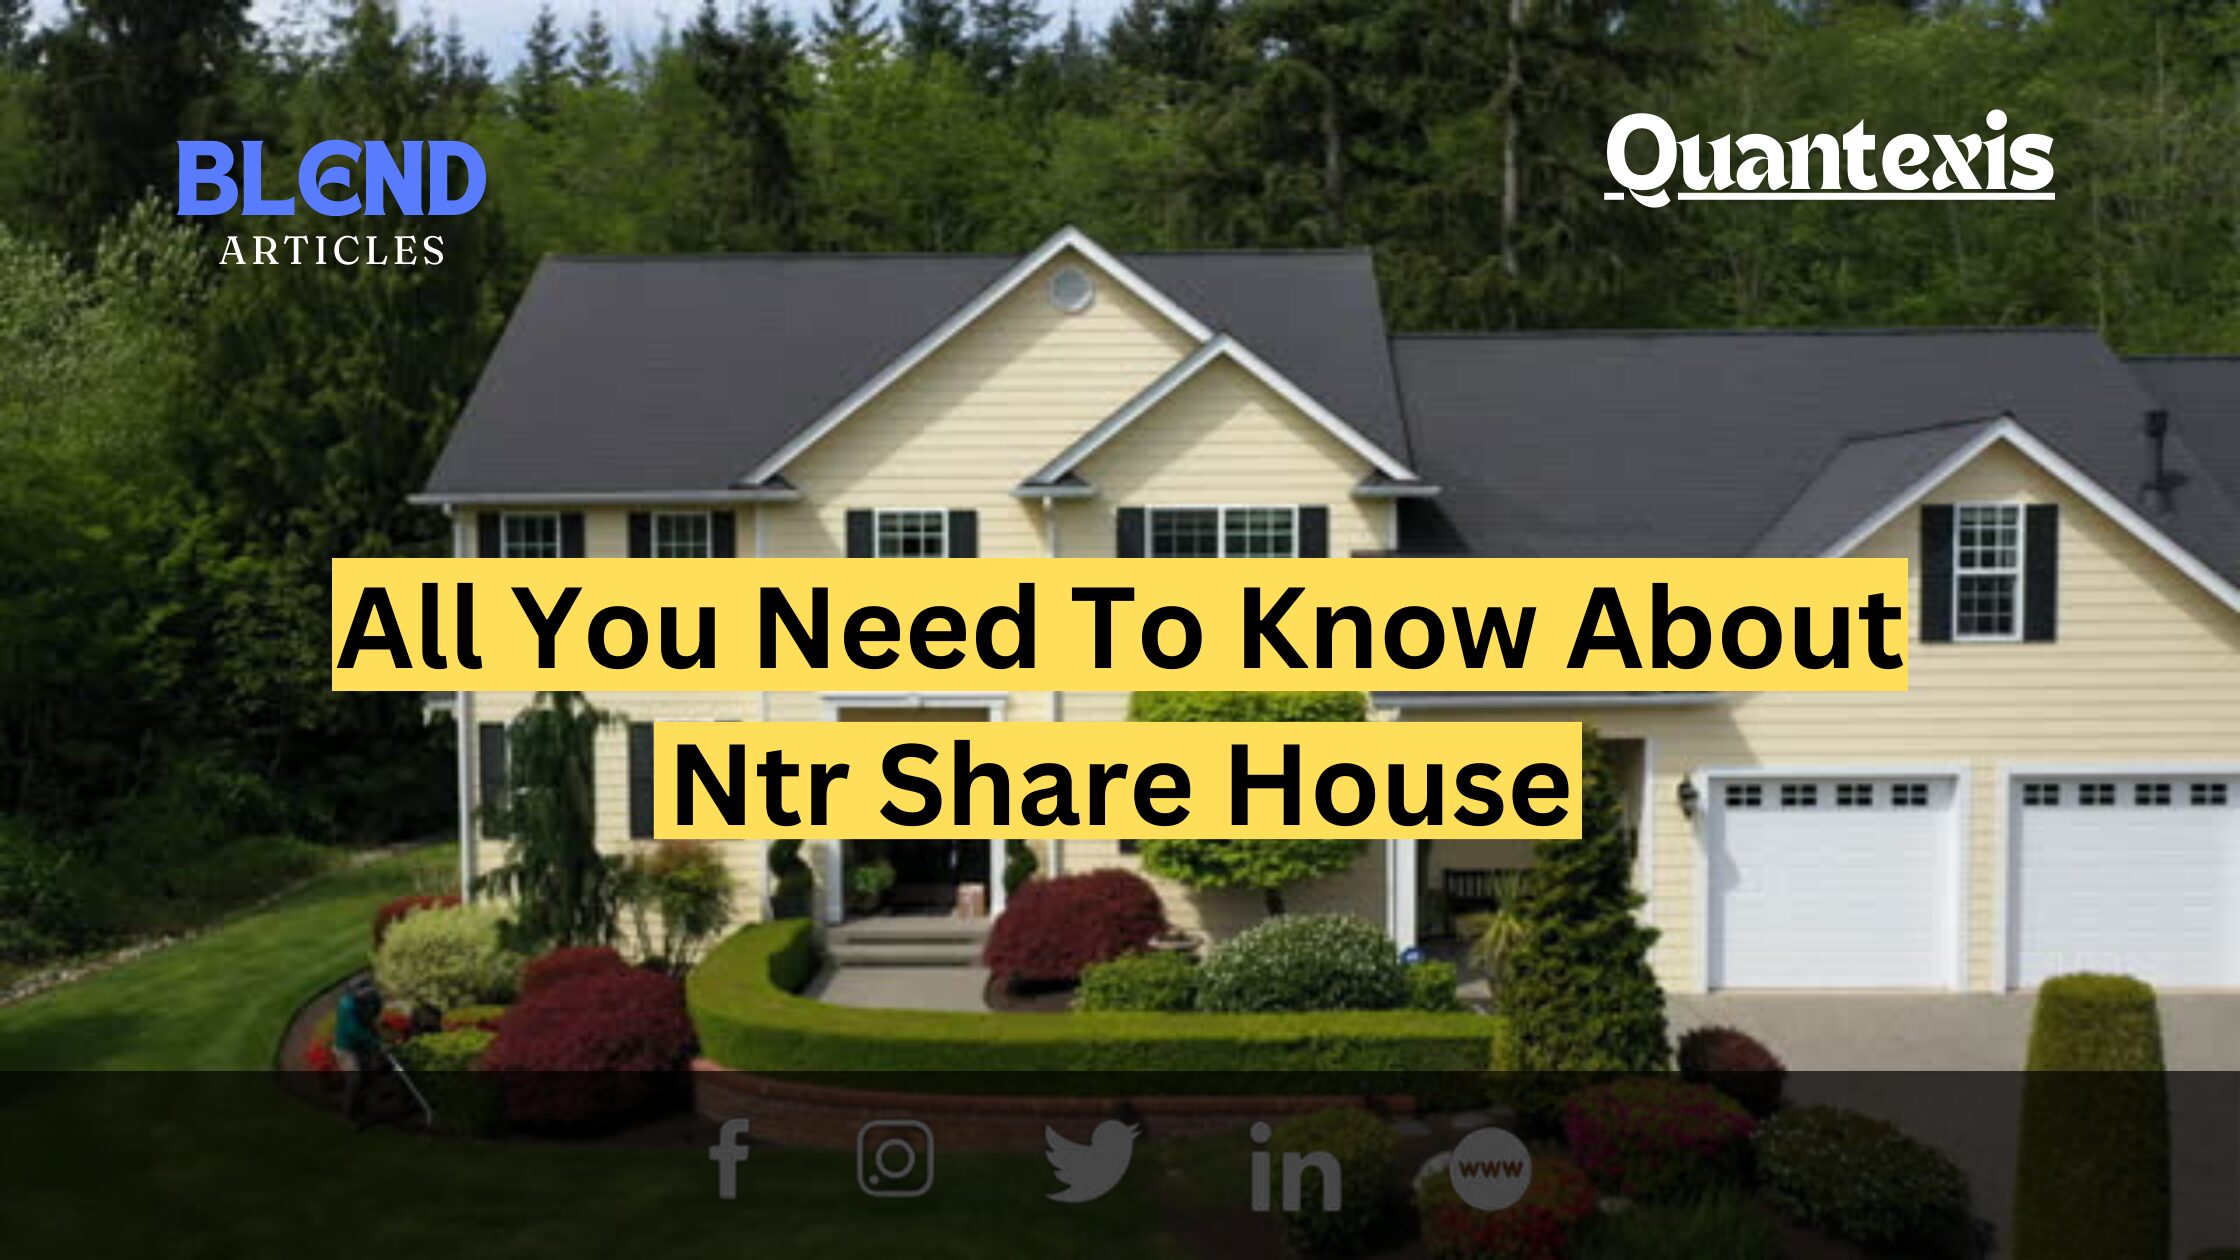 ntr share house